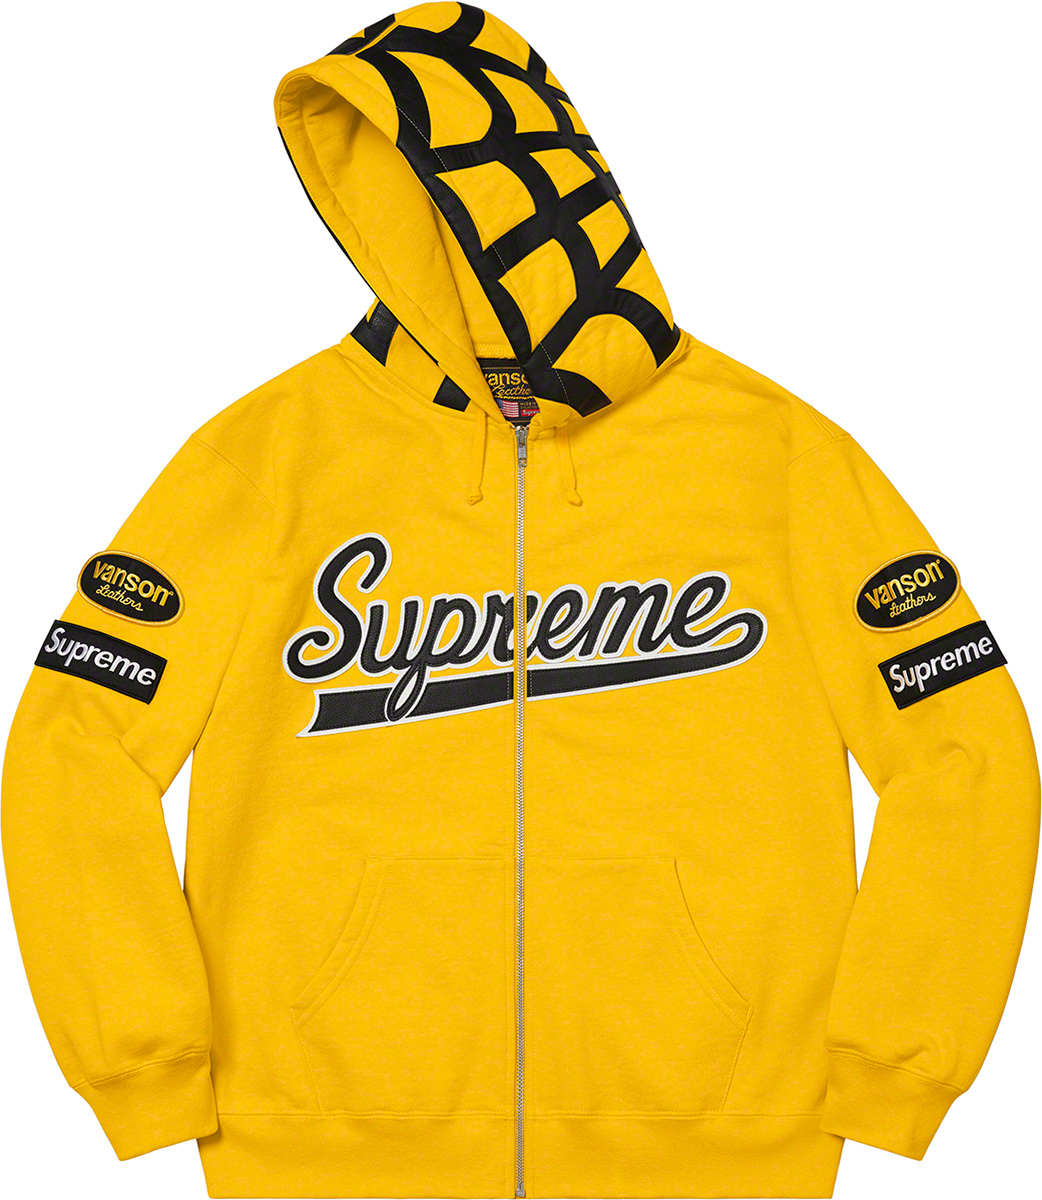 Supreme/Vanson Leathers Spider Web Zip Up Hooded Sweatshirt